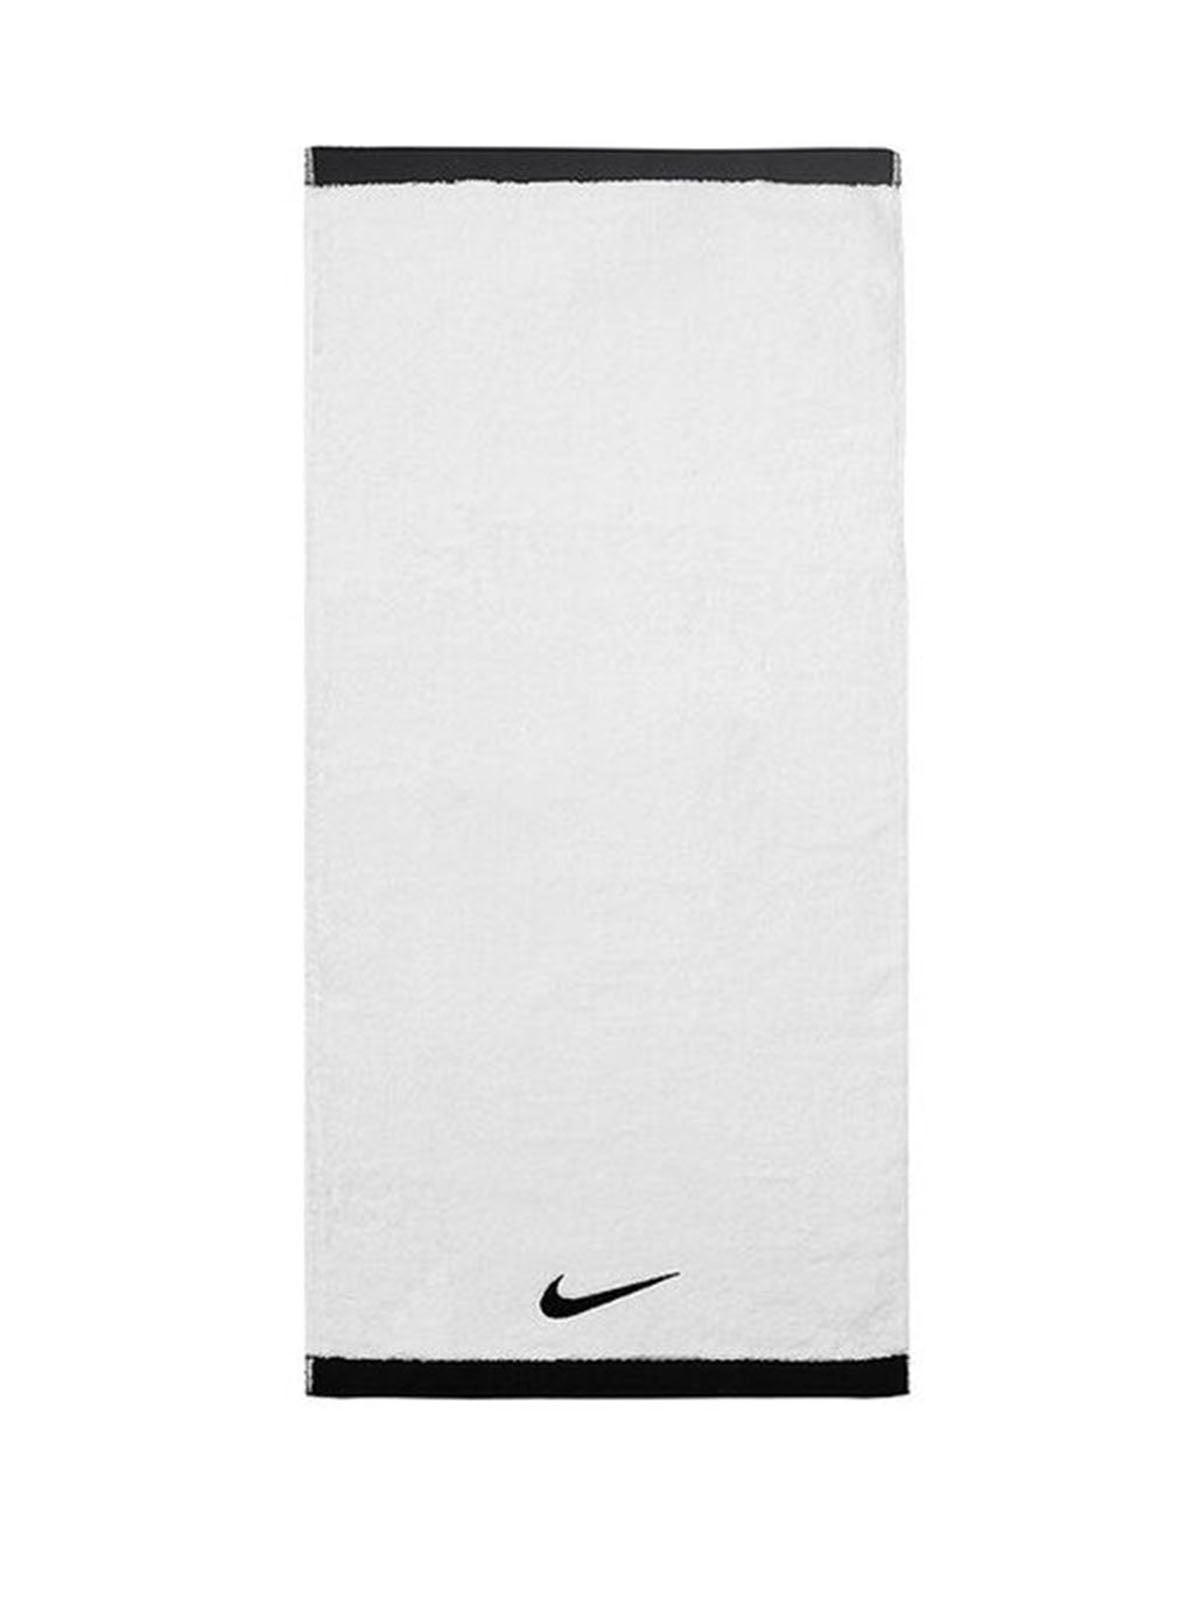 Unisex Nike Gym Towels - Nike Fundamental Medium Towel - White